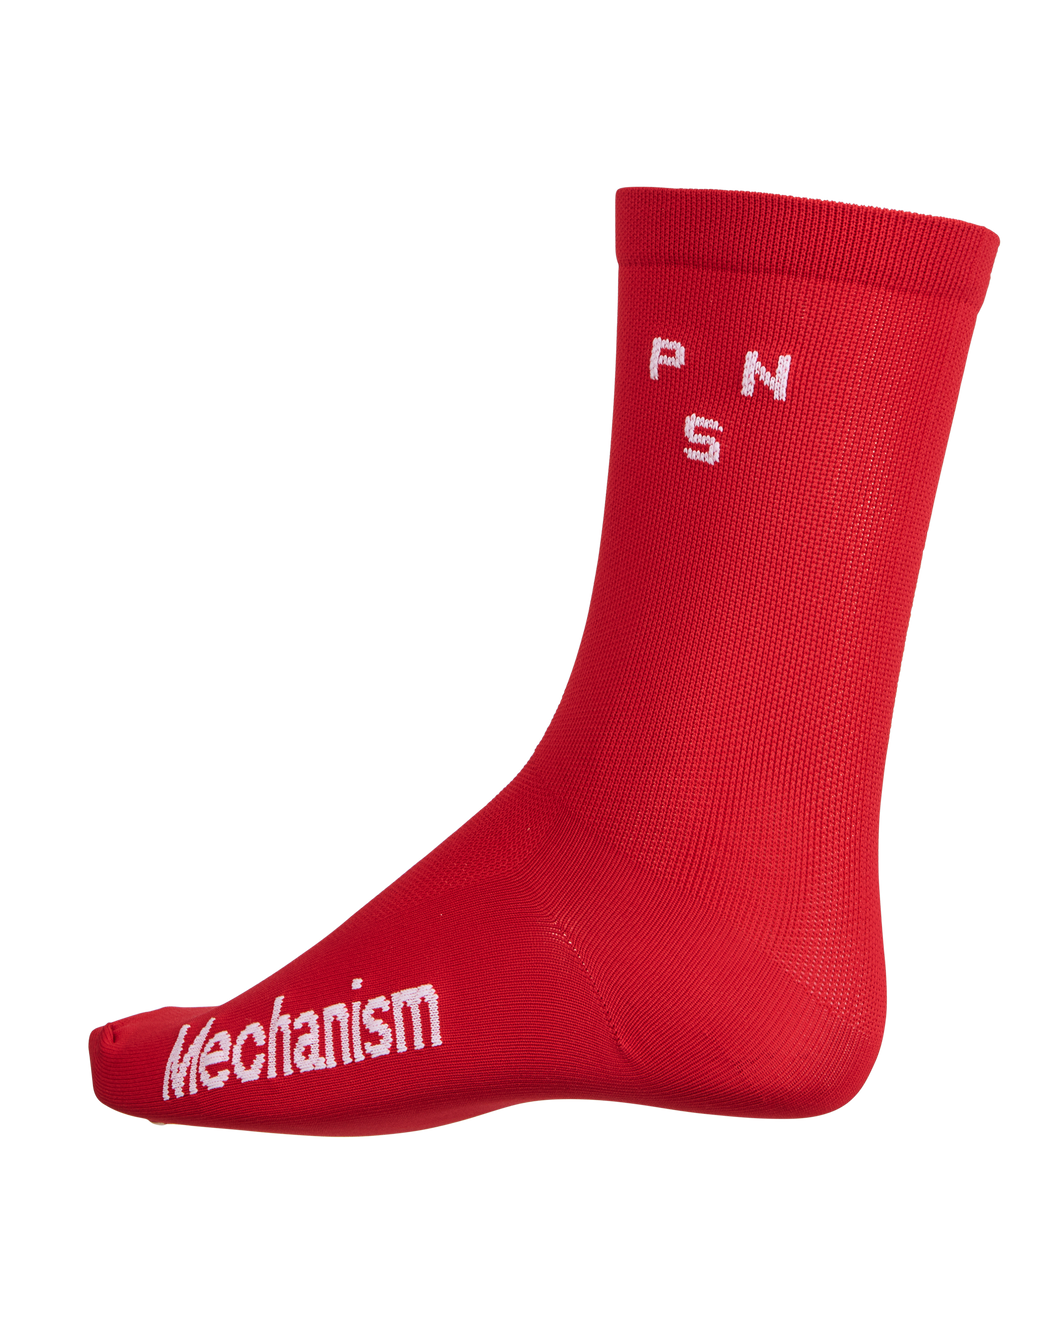 PNS Mechanism Socks (Deep Red)